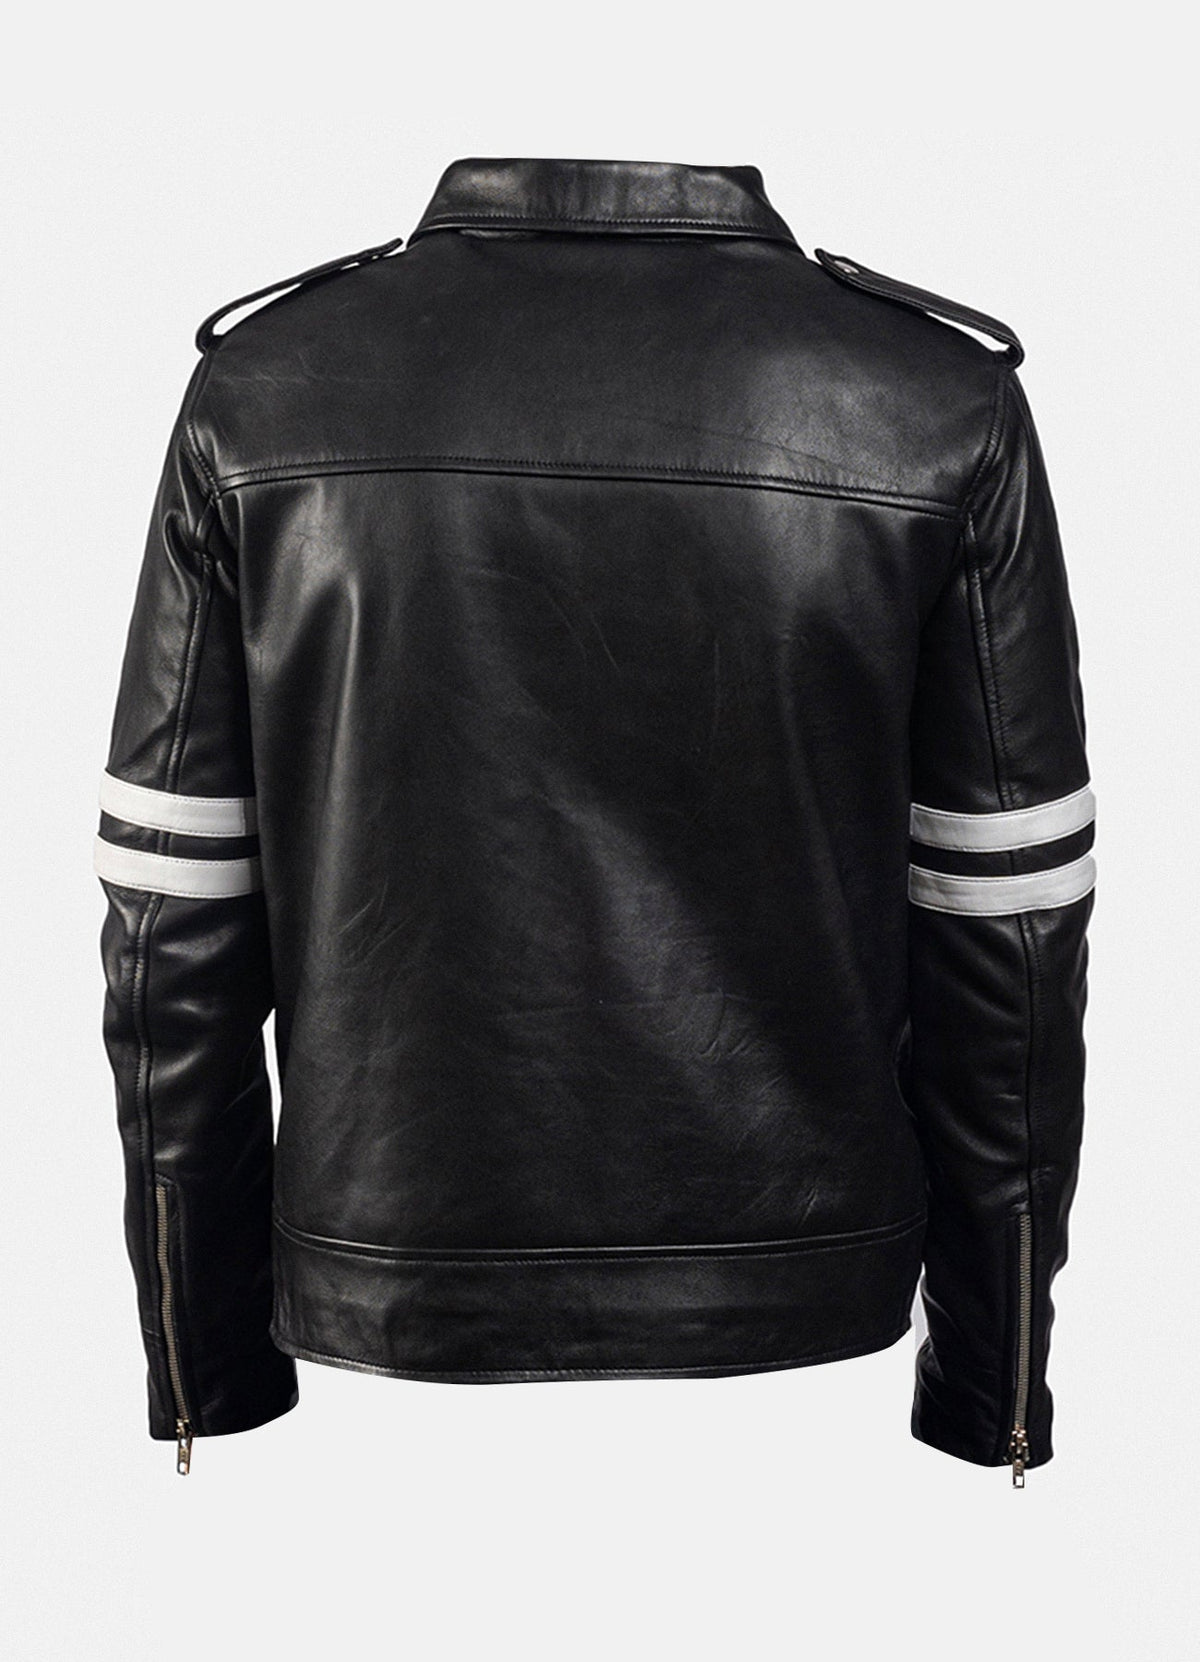 Mens Authentic Black & White Biker Leather Jacket